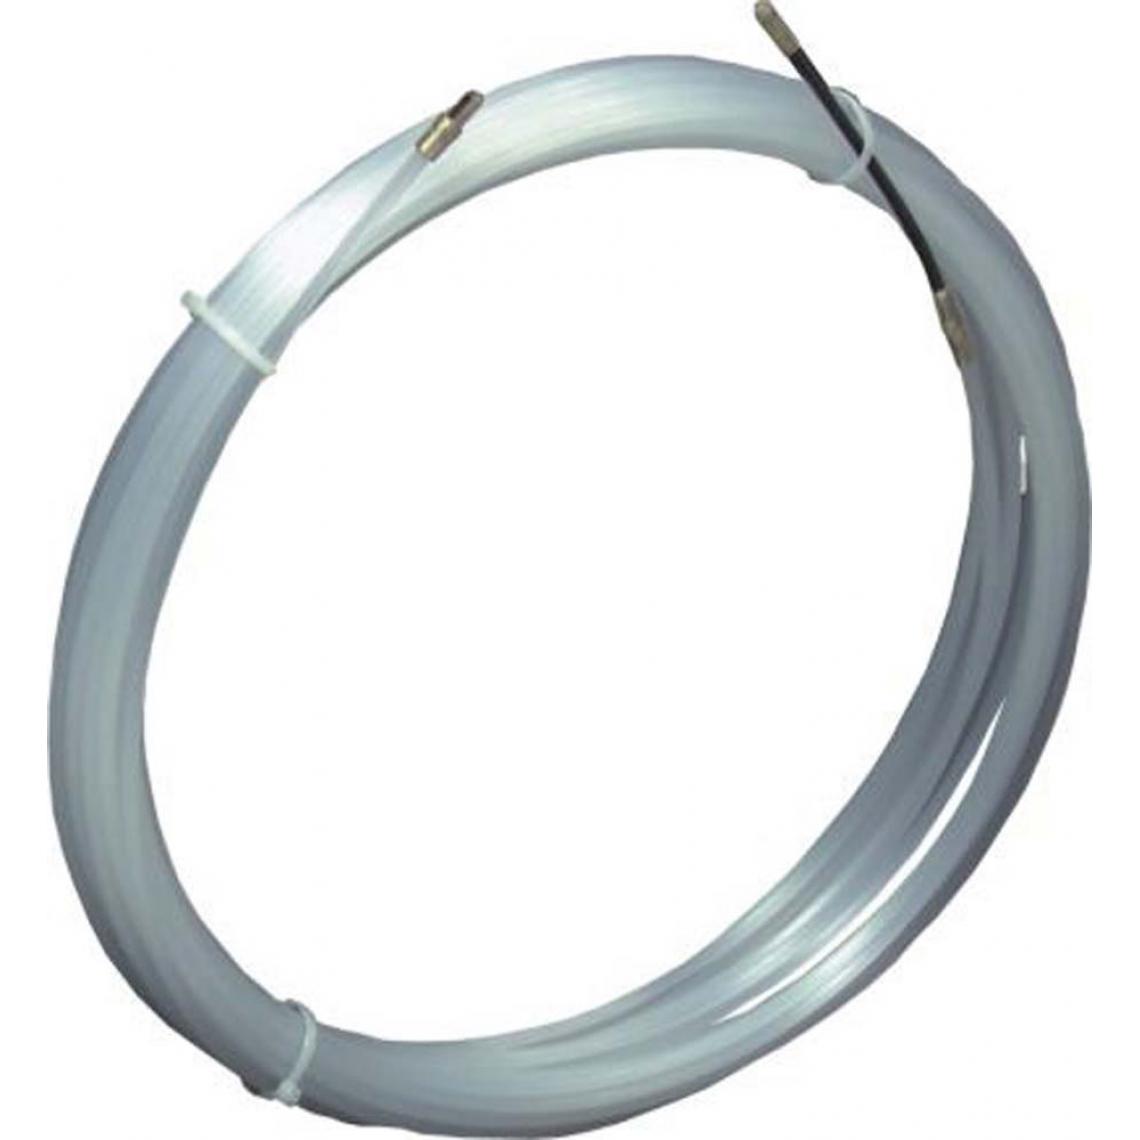 Dio - Tire fil nylon diamètre 4mm - Longueur 10m - Gaines ICTA